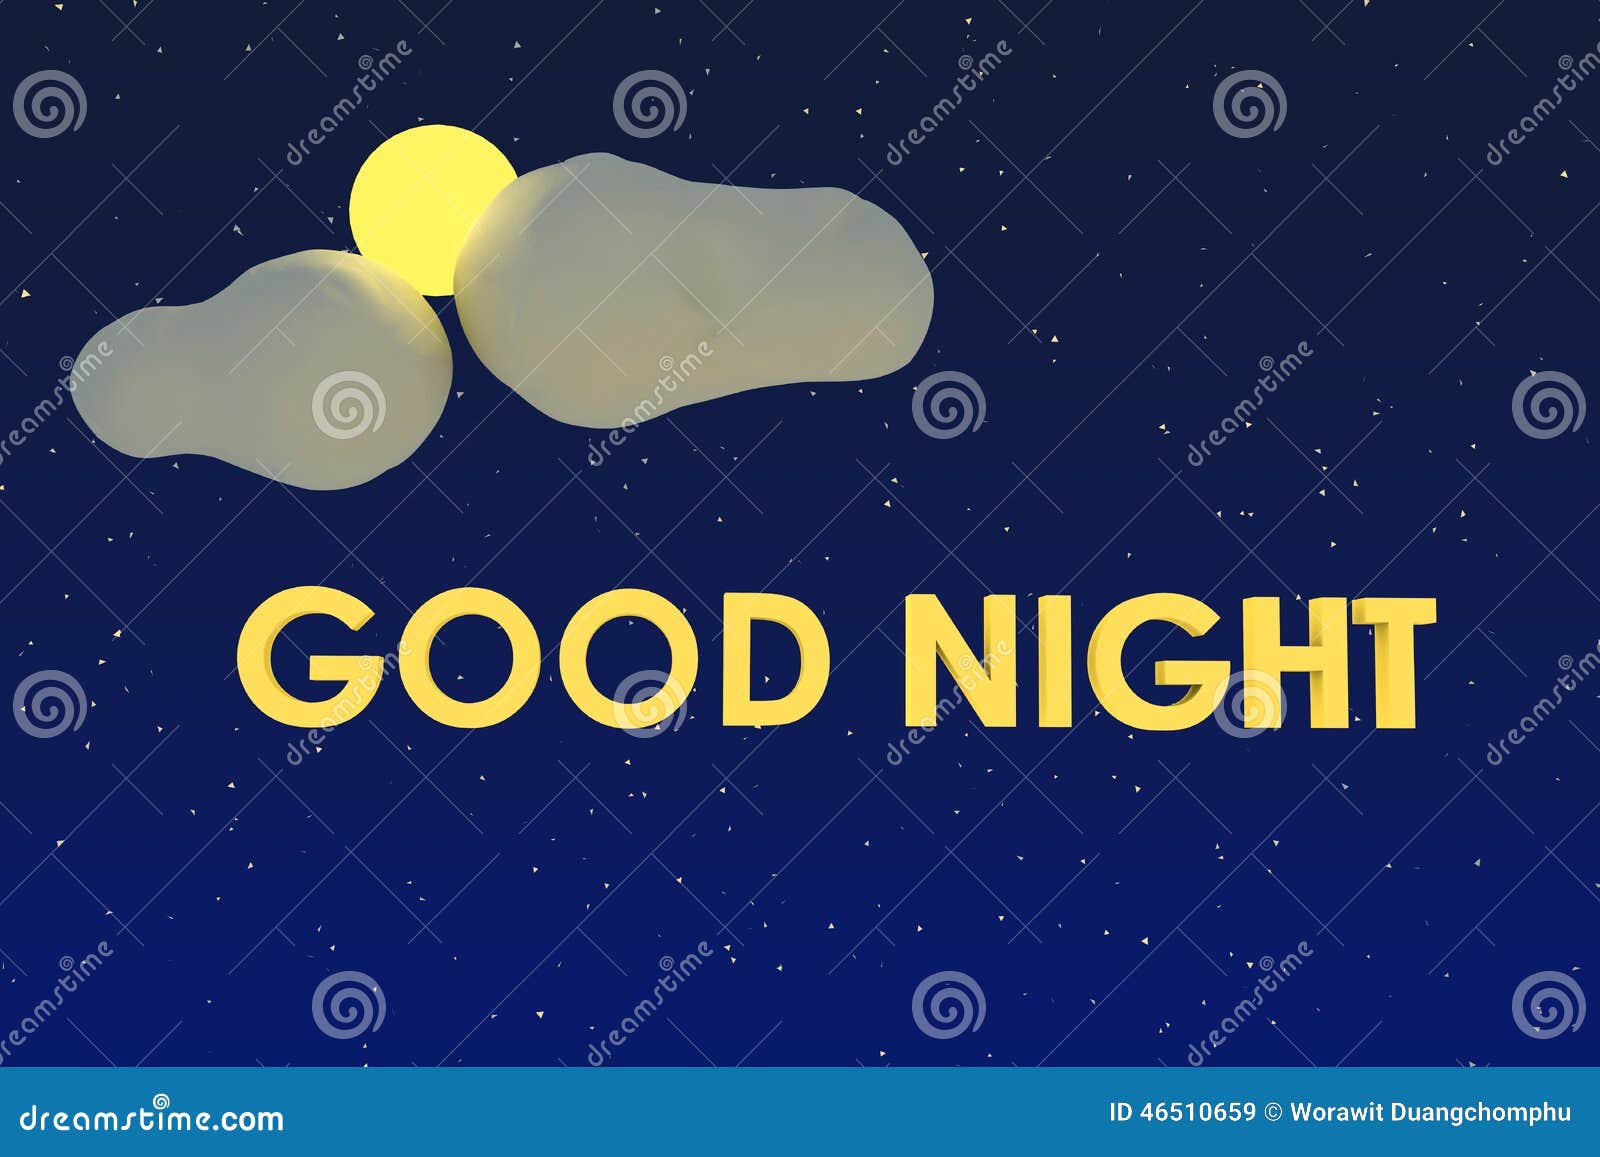 Good Night stock illustration. Illustration of cartoon - 46510659